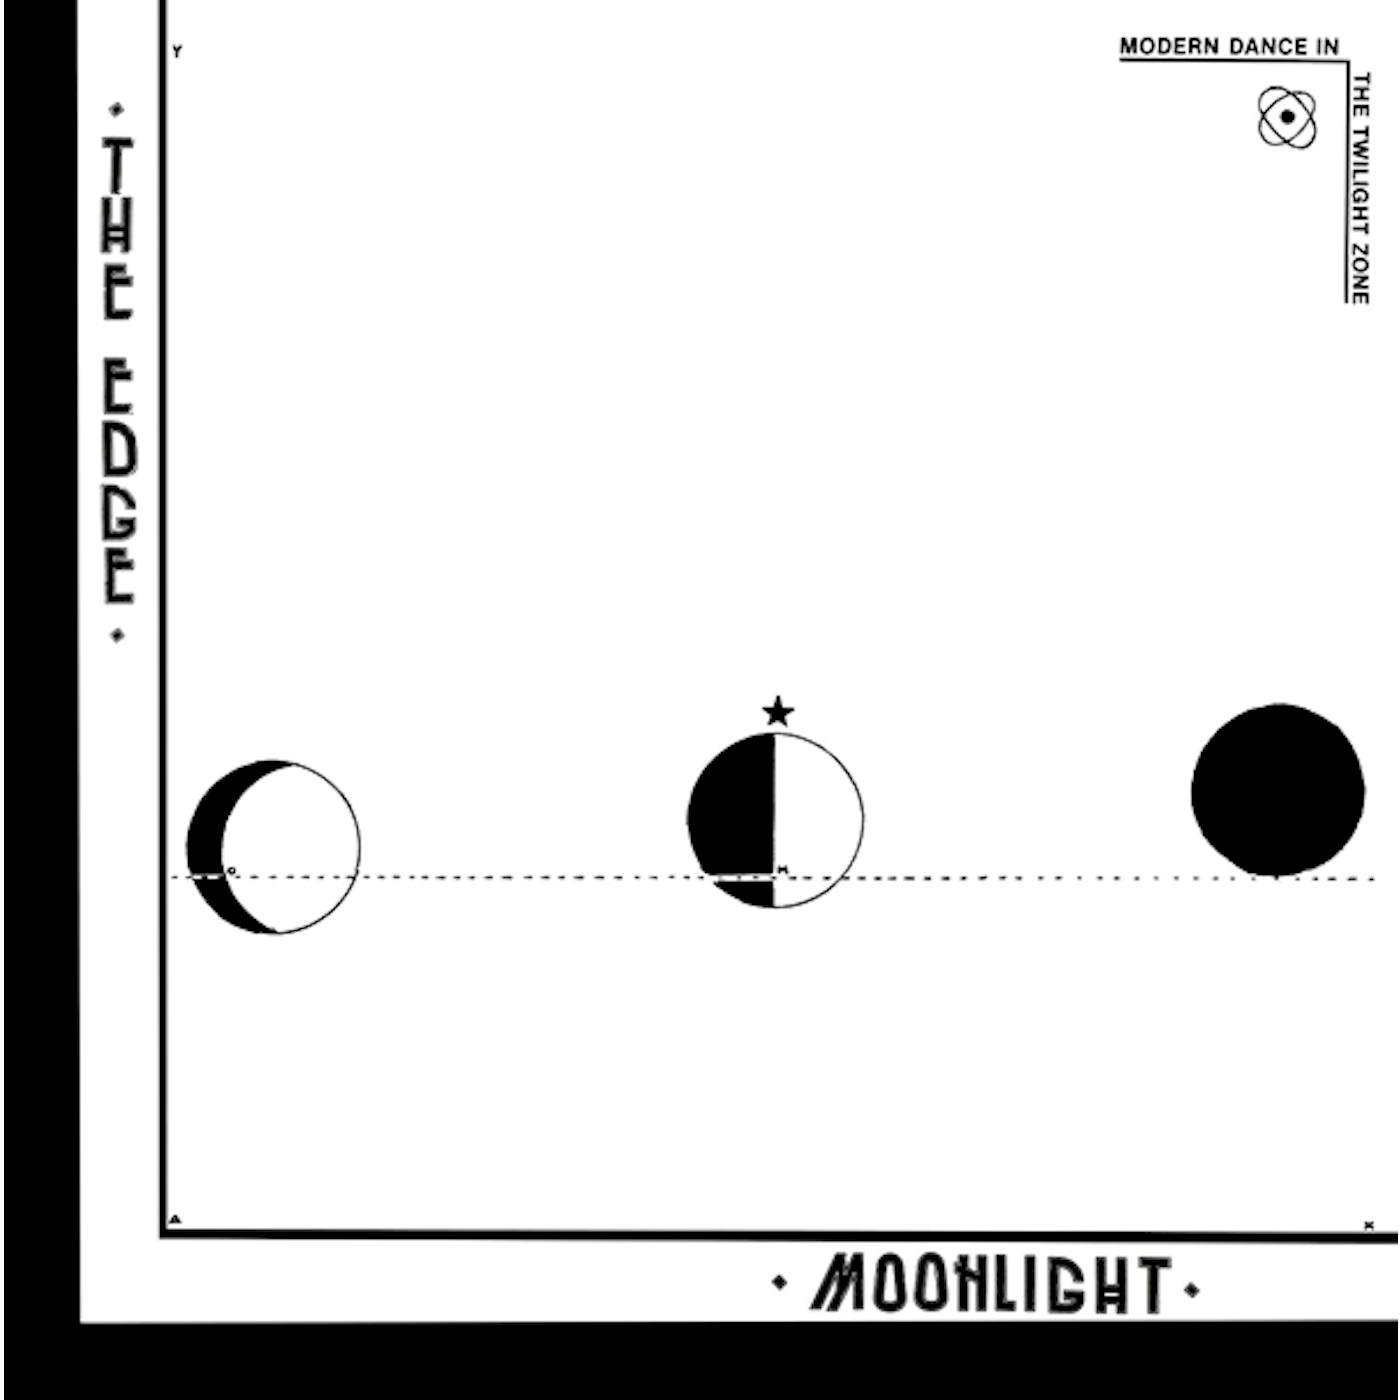 Moonlight EDGE (MODERN DANCE IN THE TWILIGHT ZONE) Vinyl Record